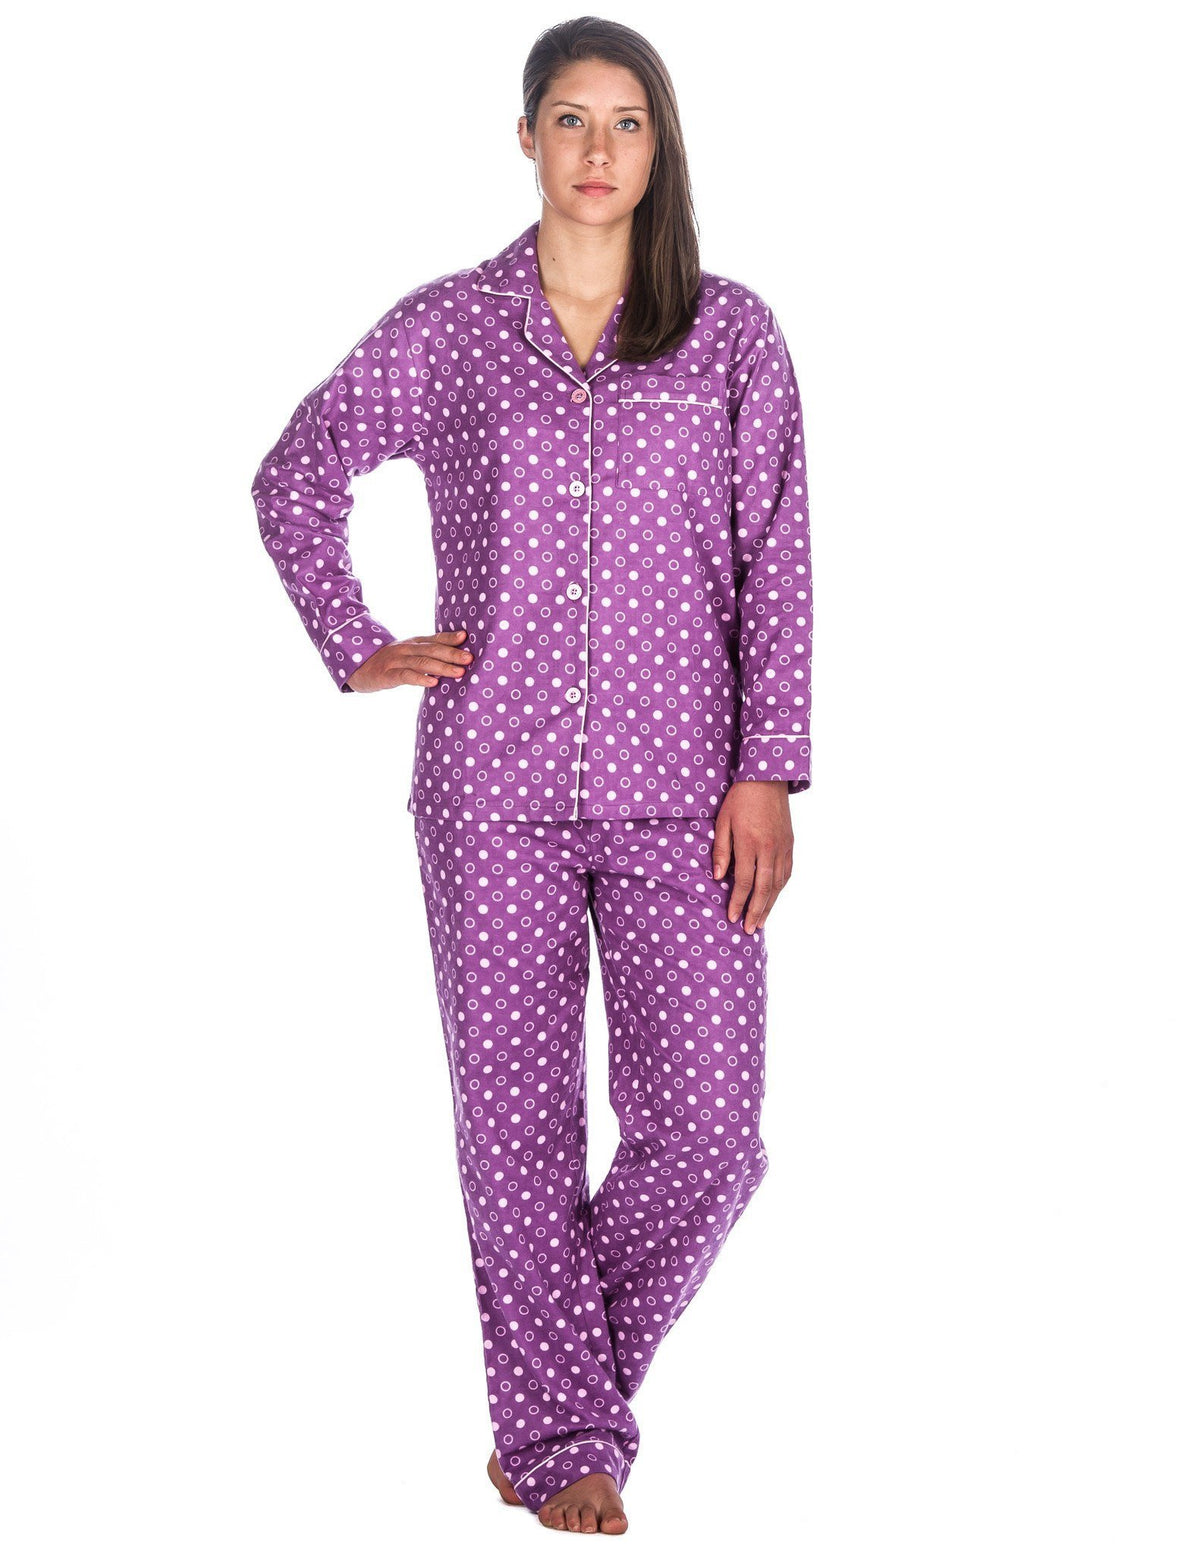 Realxed Fit Womens 100% Cotton Flannel Pajama Sleepwear Set - Polka Circles Purple